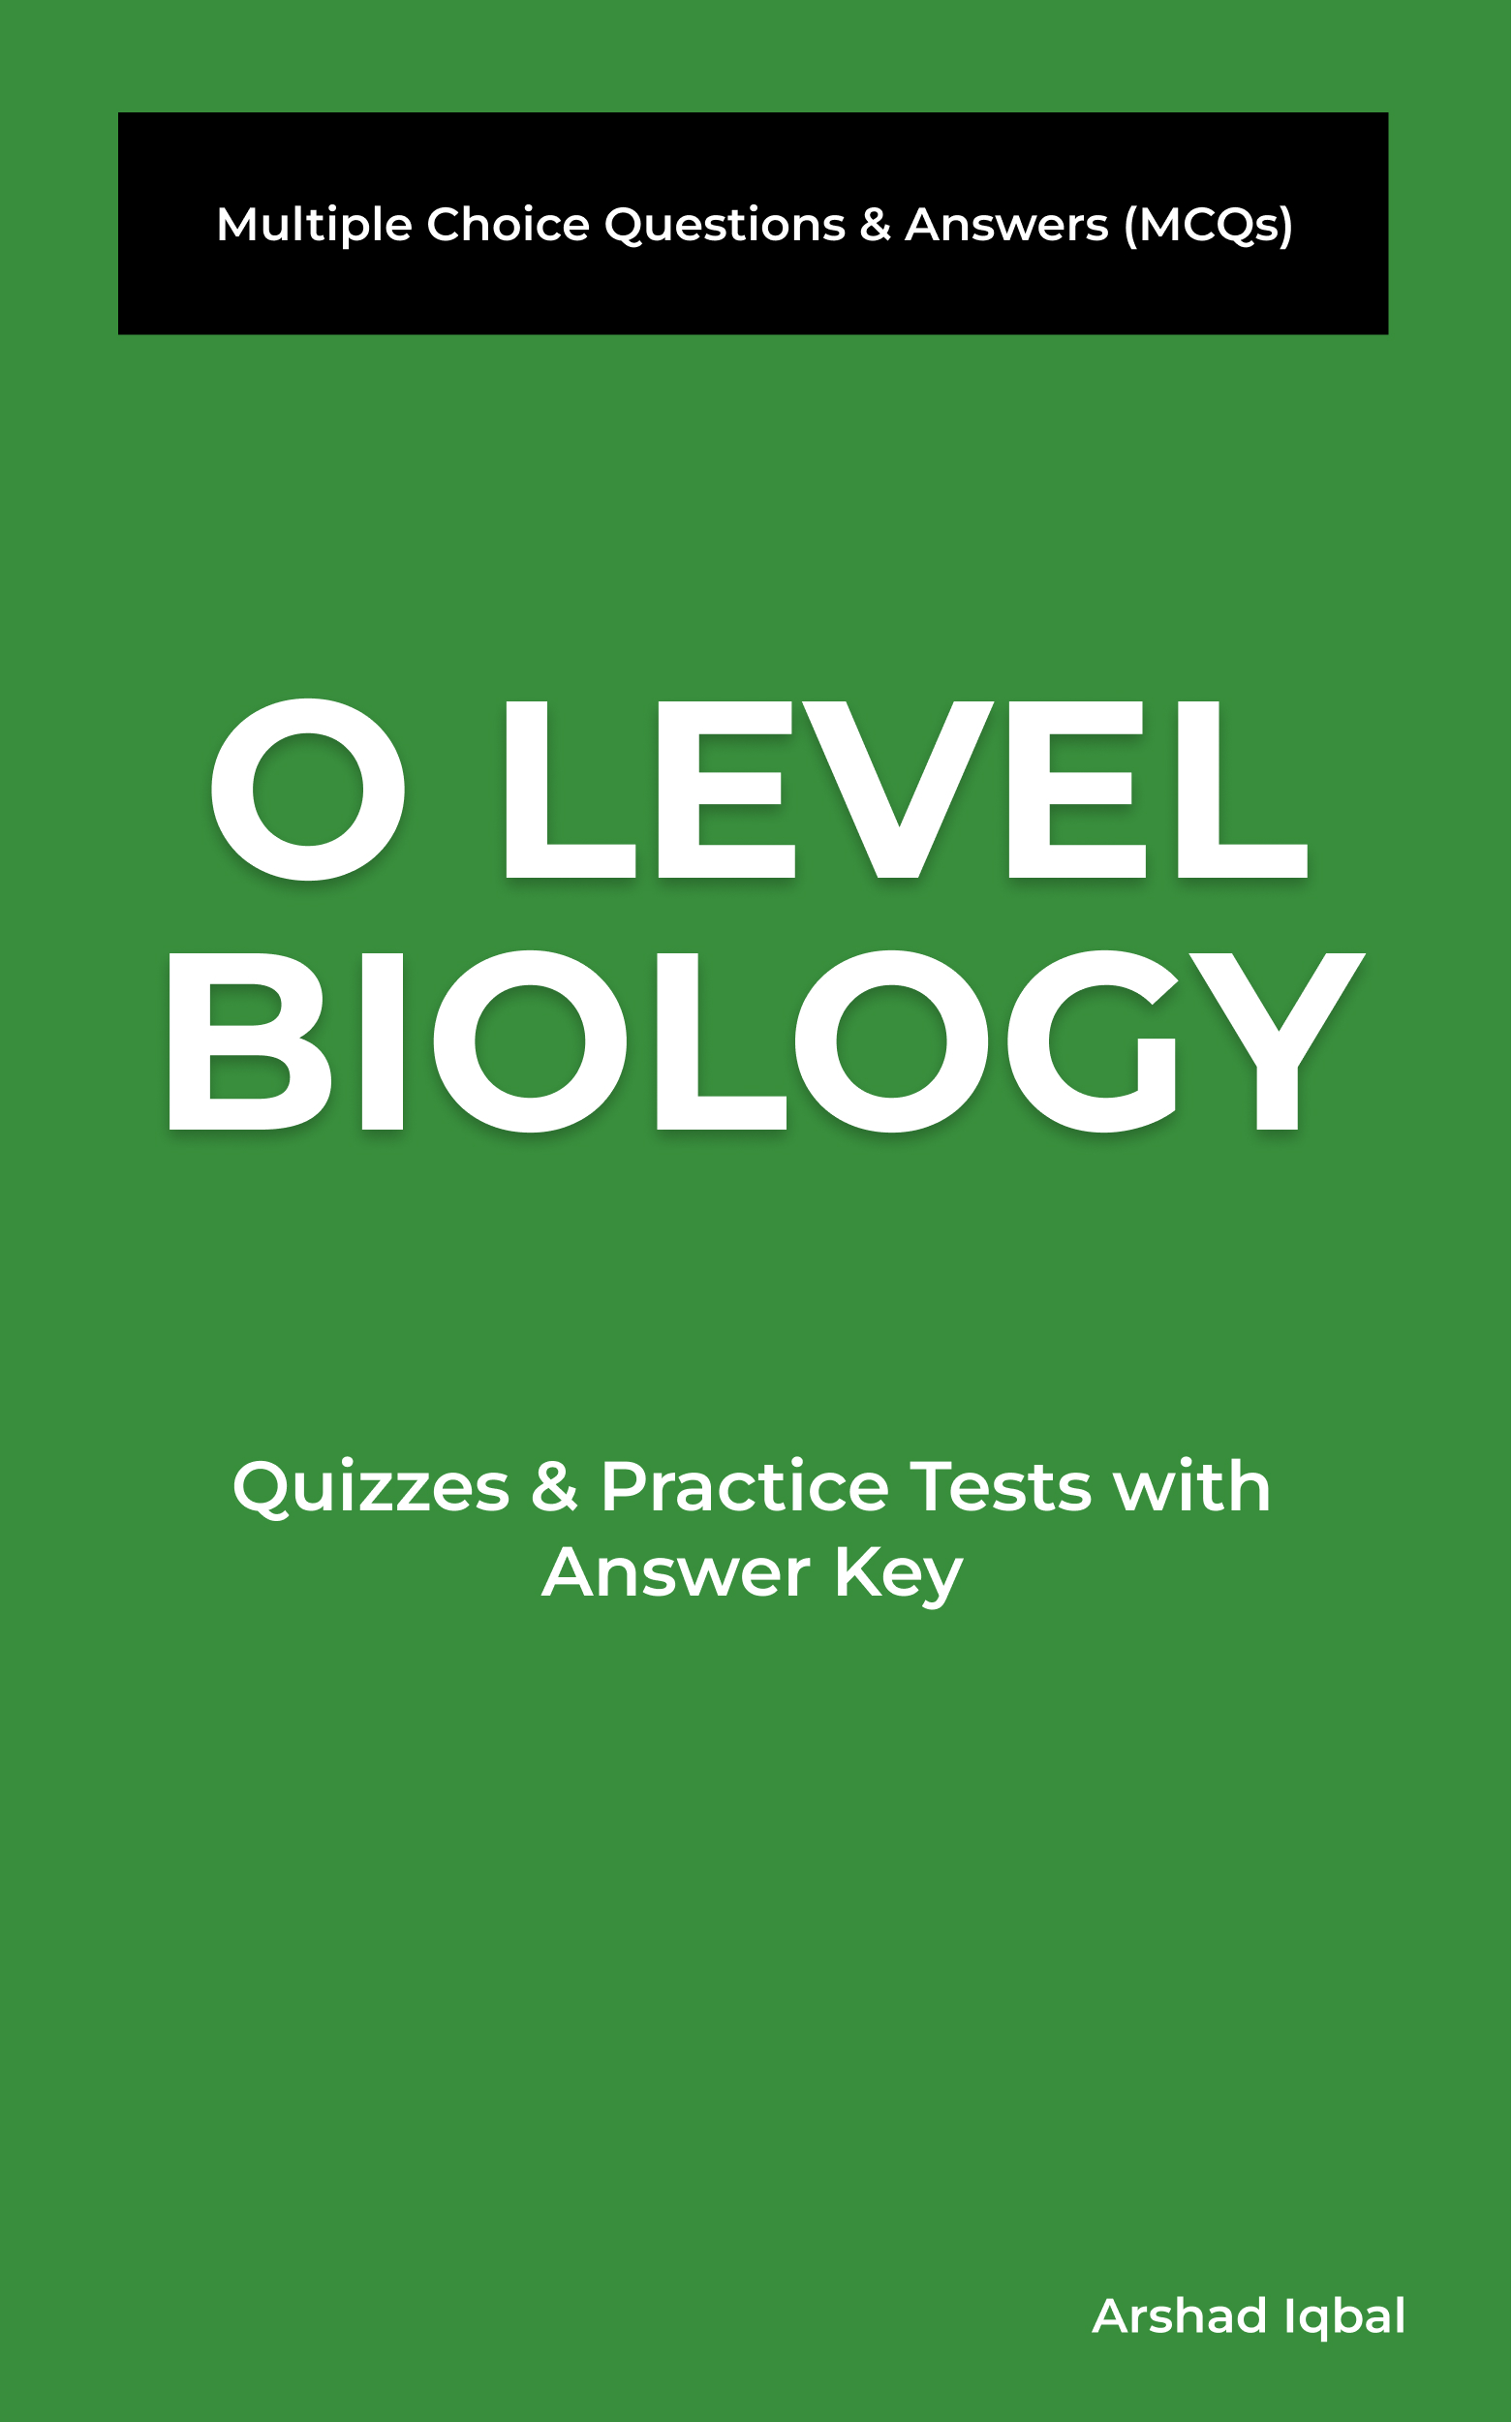 O Level Biology Book PDF